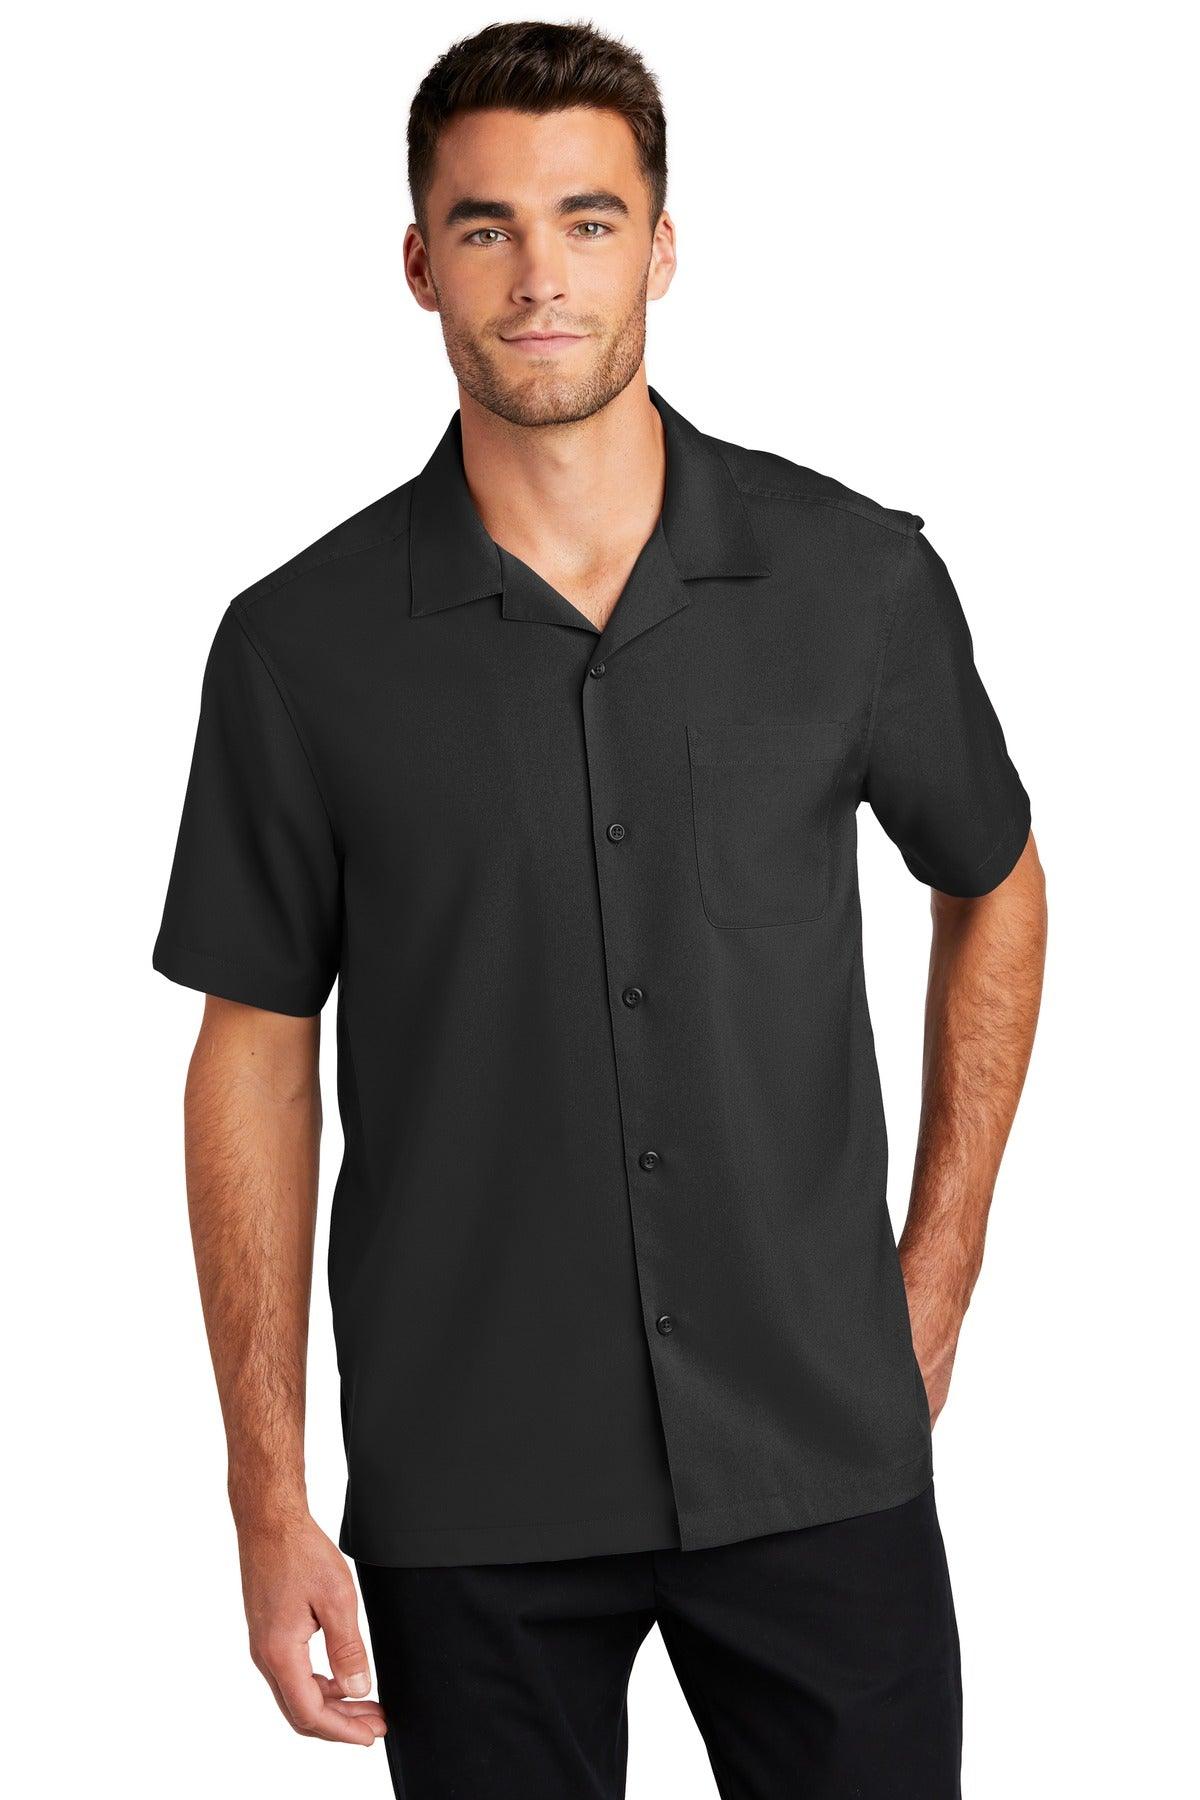 Port Authority Short Sleeve Performance Staff Shirt W400 - Dresses Max